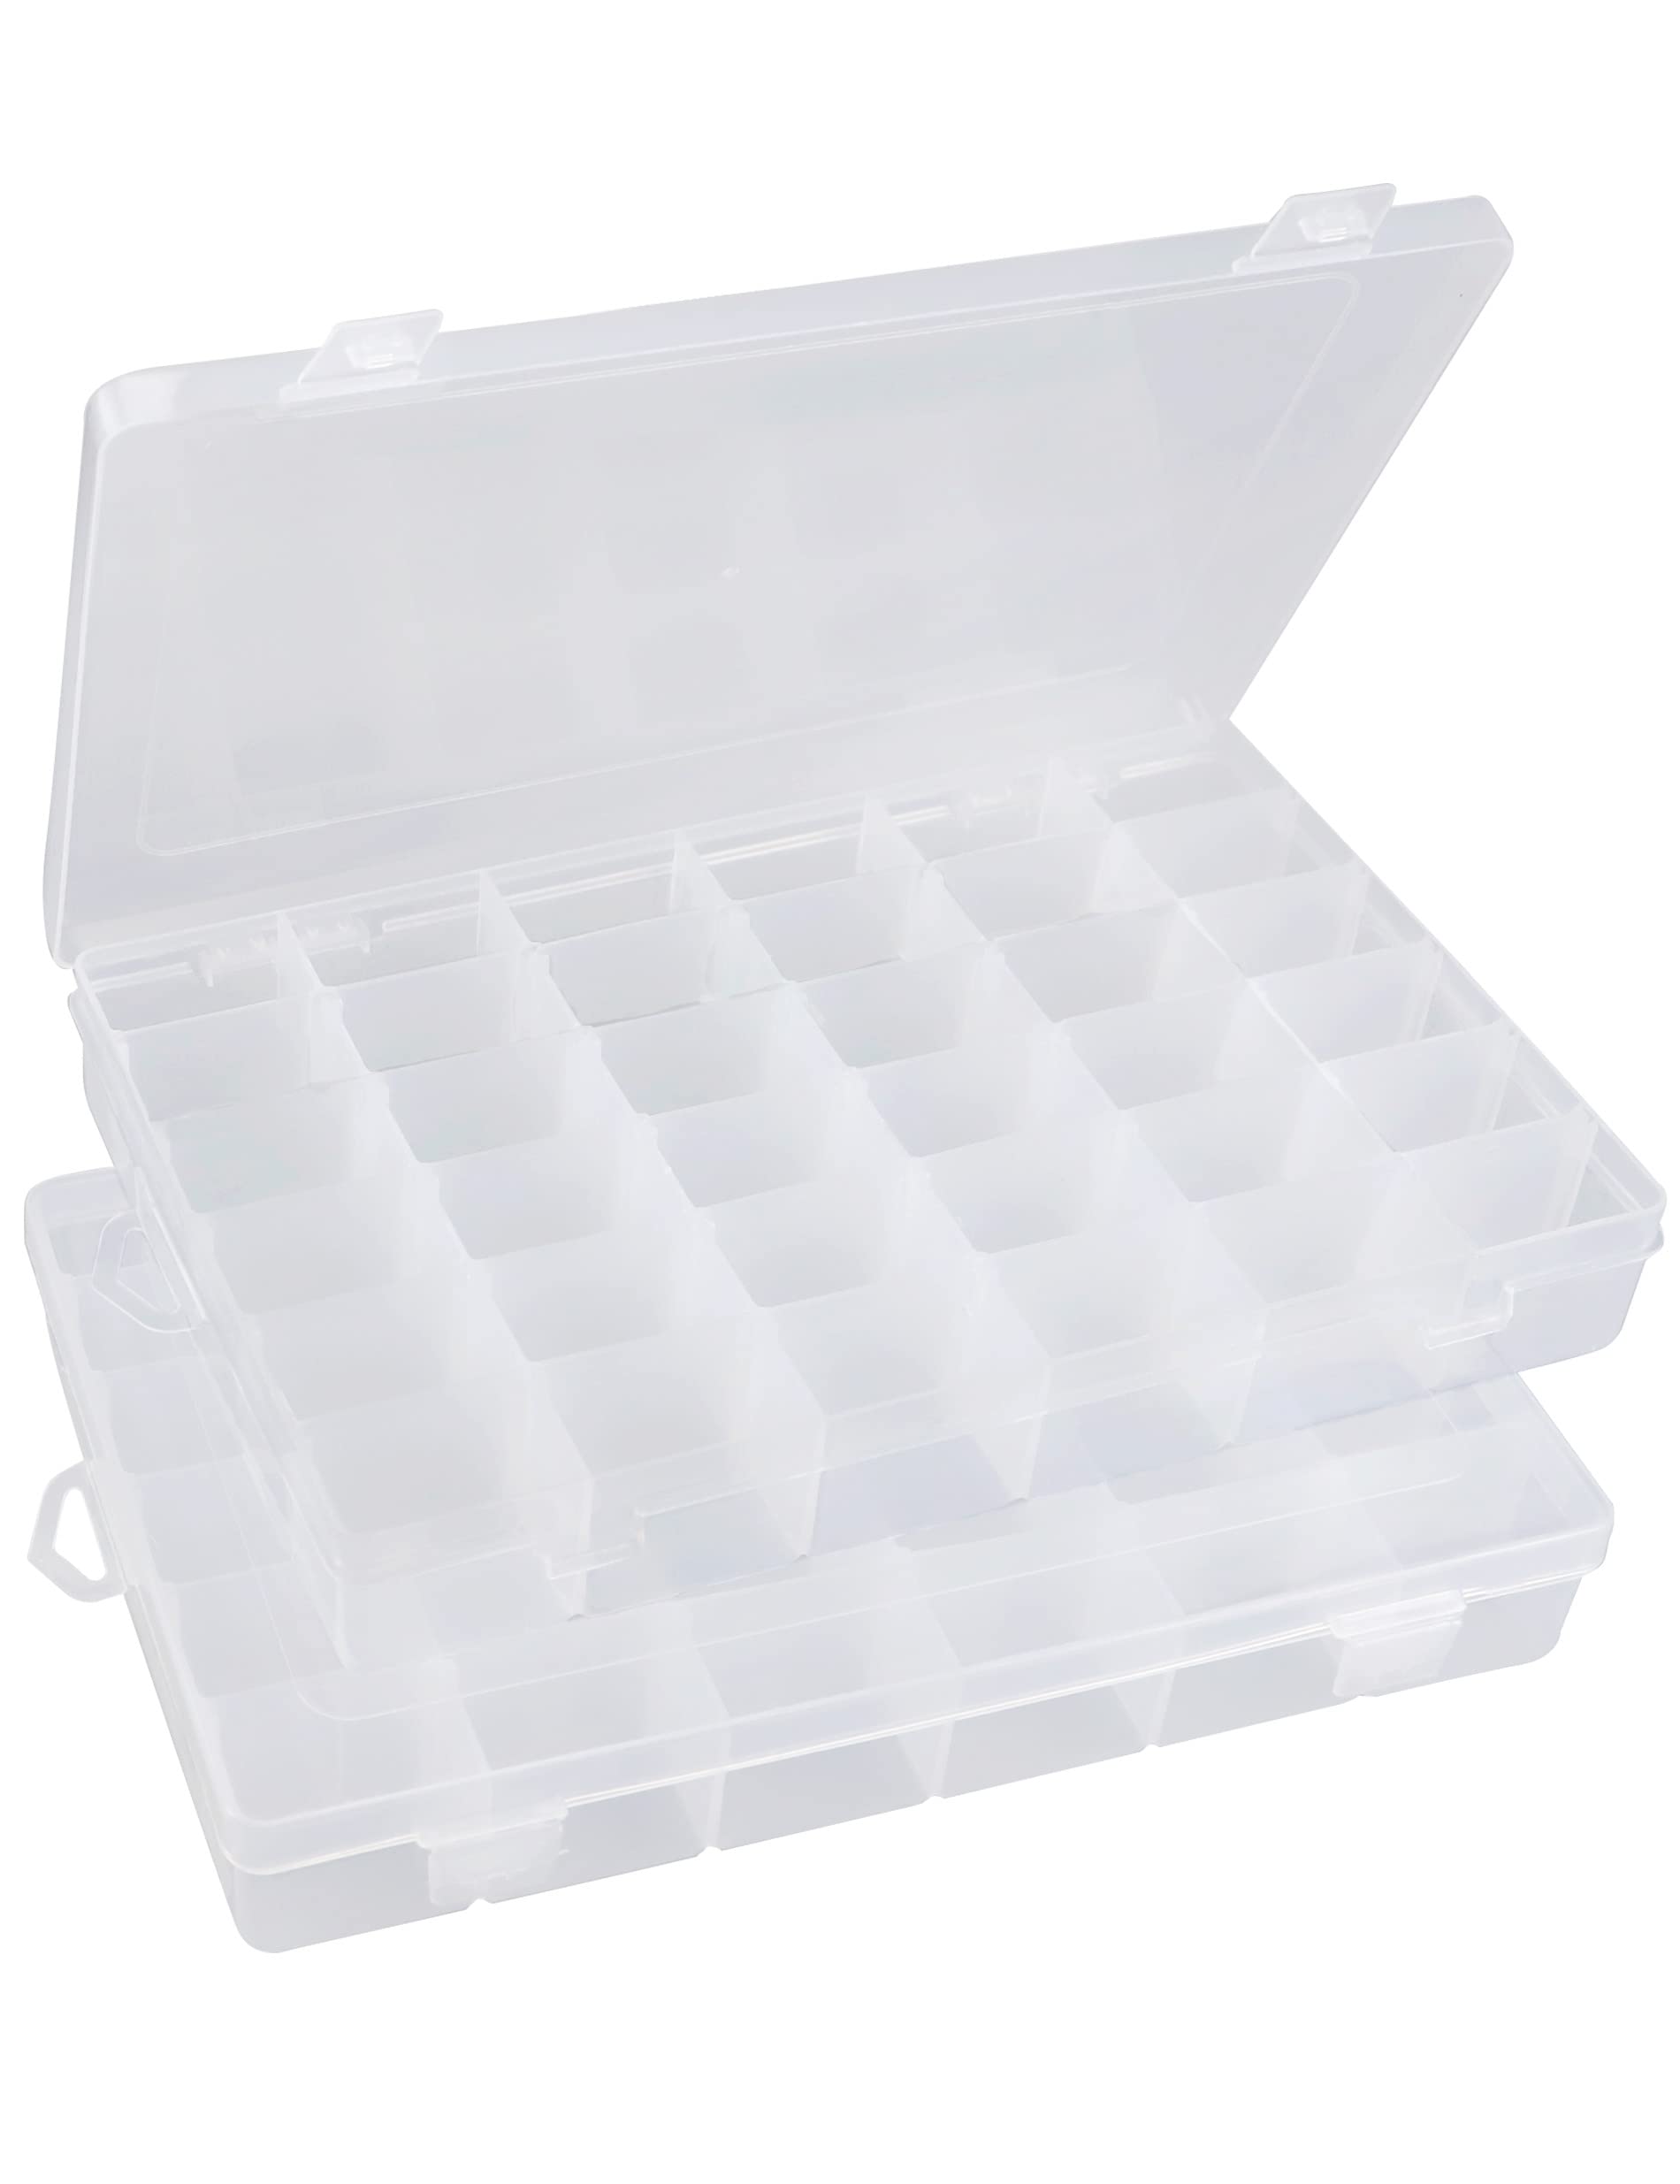 Beoccudo Tackle Box Bead Organizer 2 Pack Fishing Tackle Box Organizer  Plastic Compartment Storage Box Container